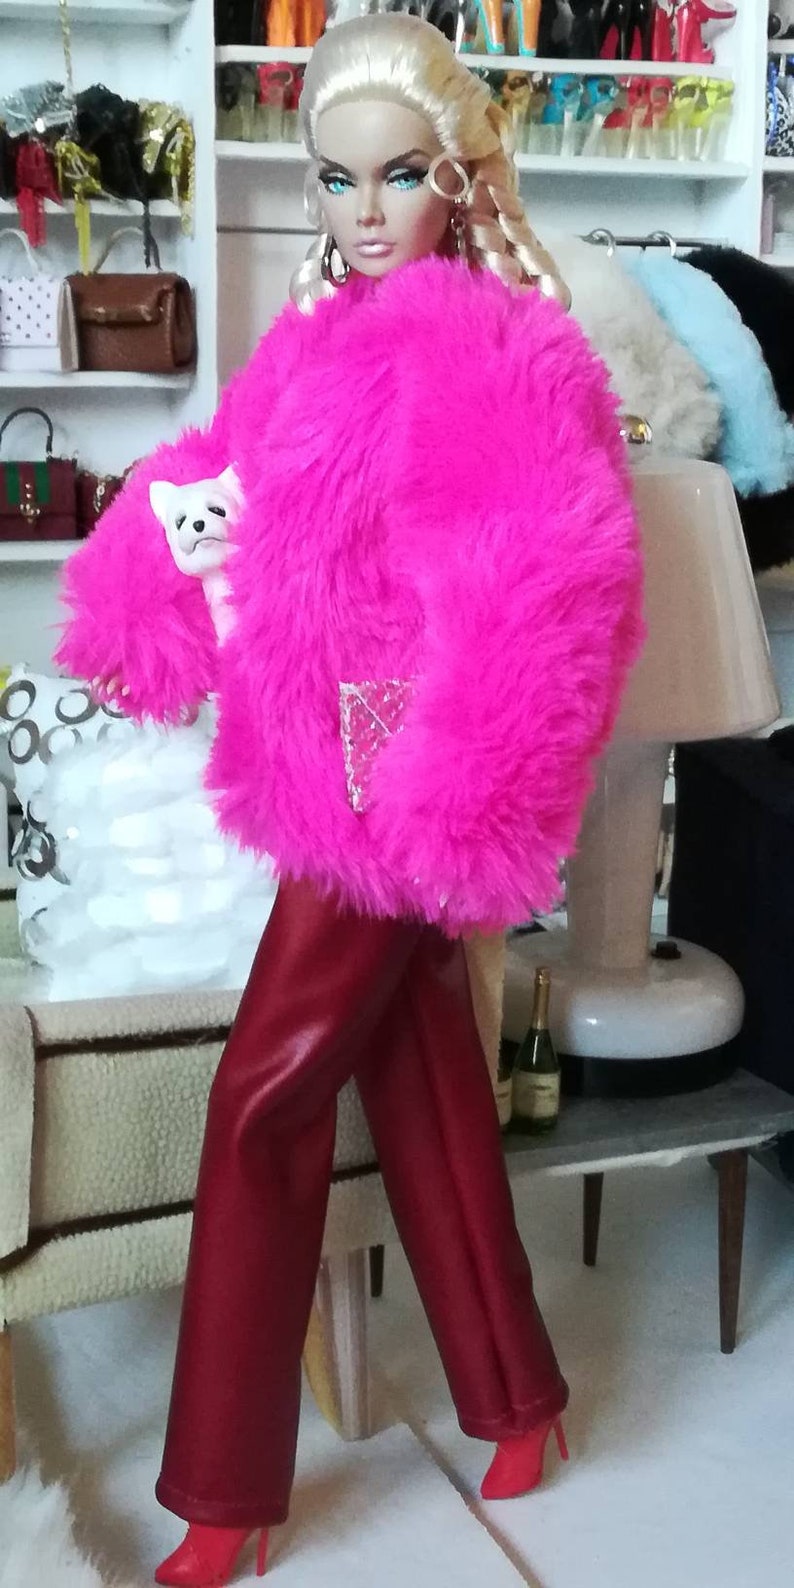 Fur coat new hot pink color just added fit poppy parker | Etsy